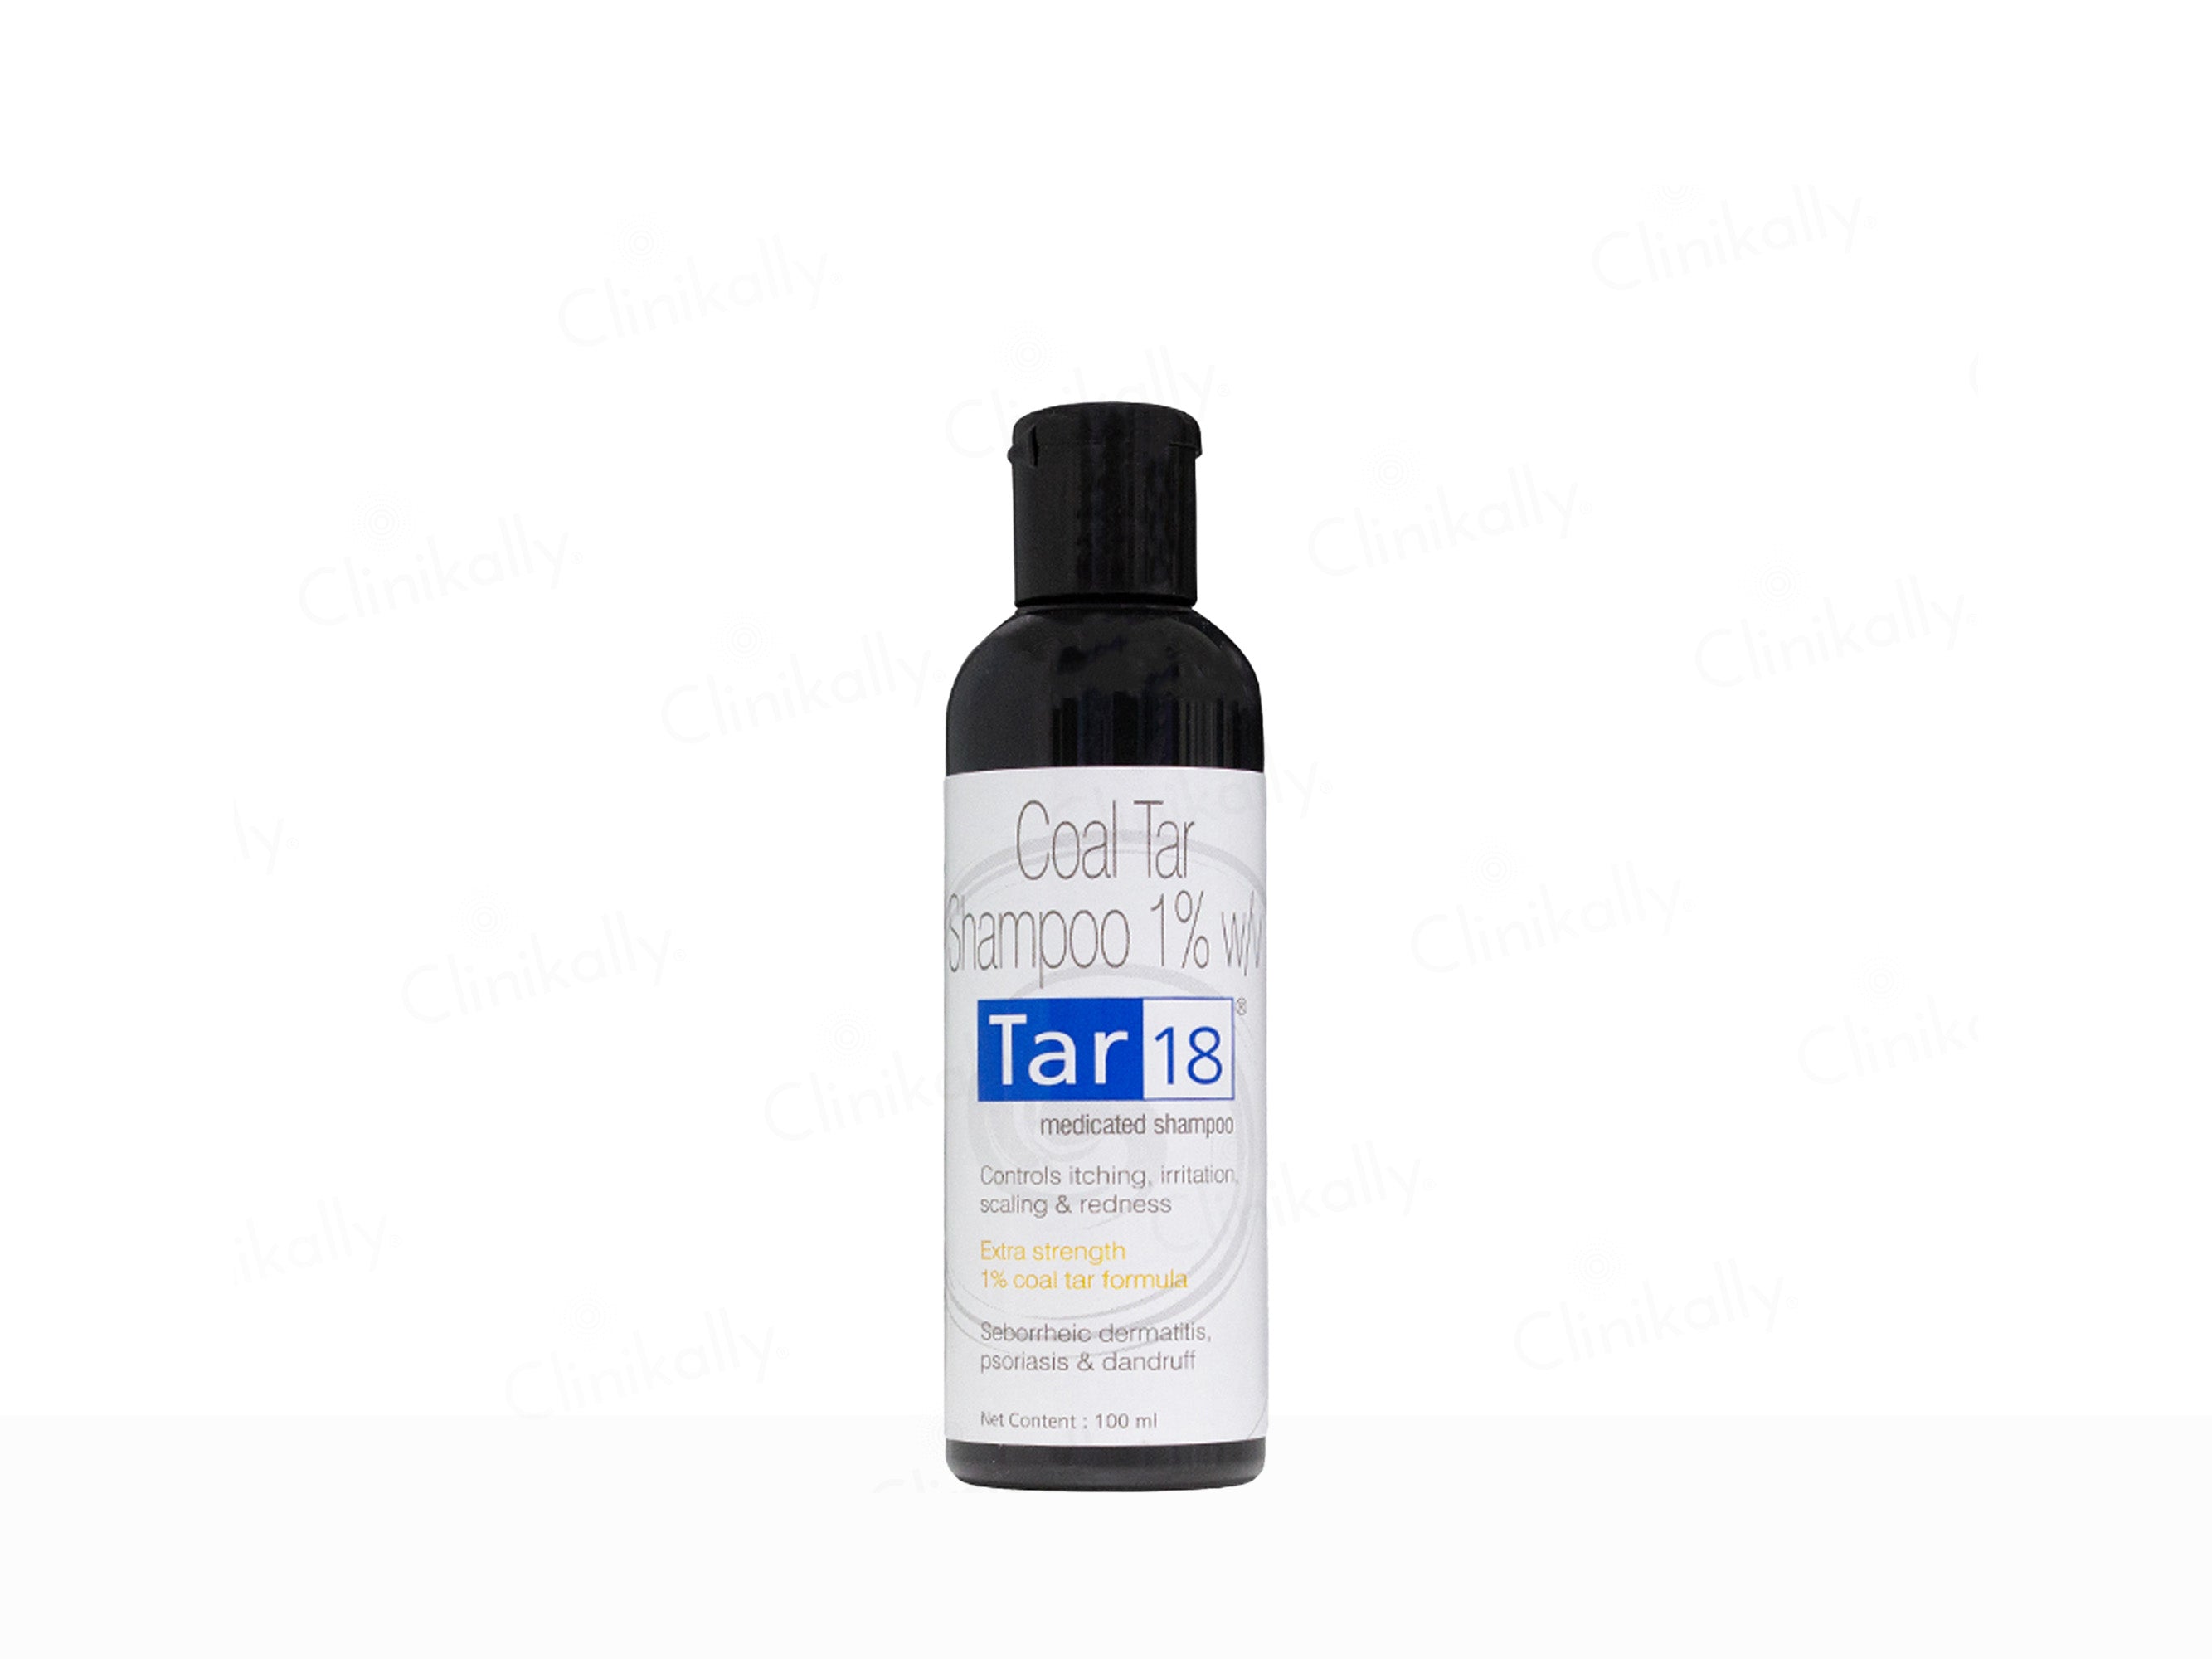 Tar 18 Medicated Shampoo with 1% Coal Tar